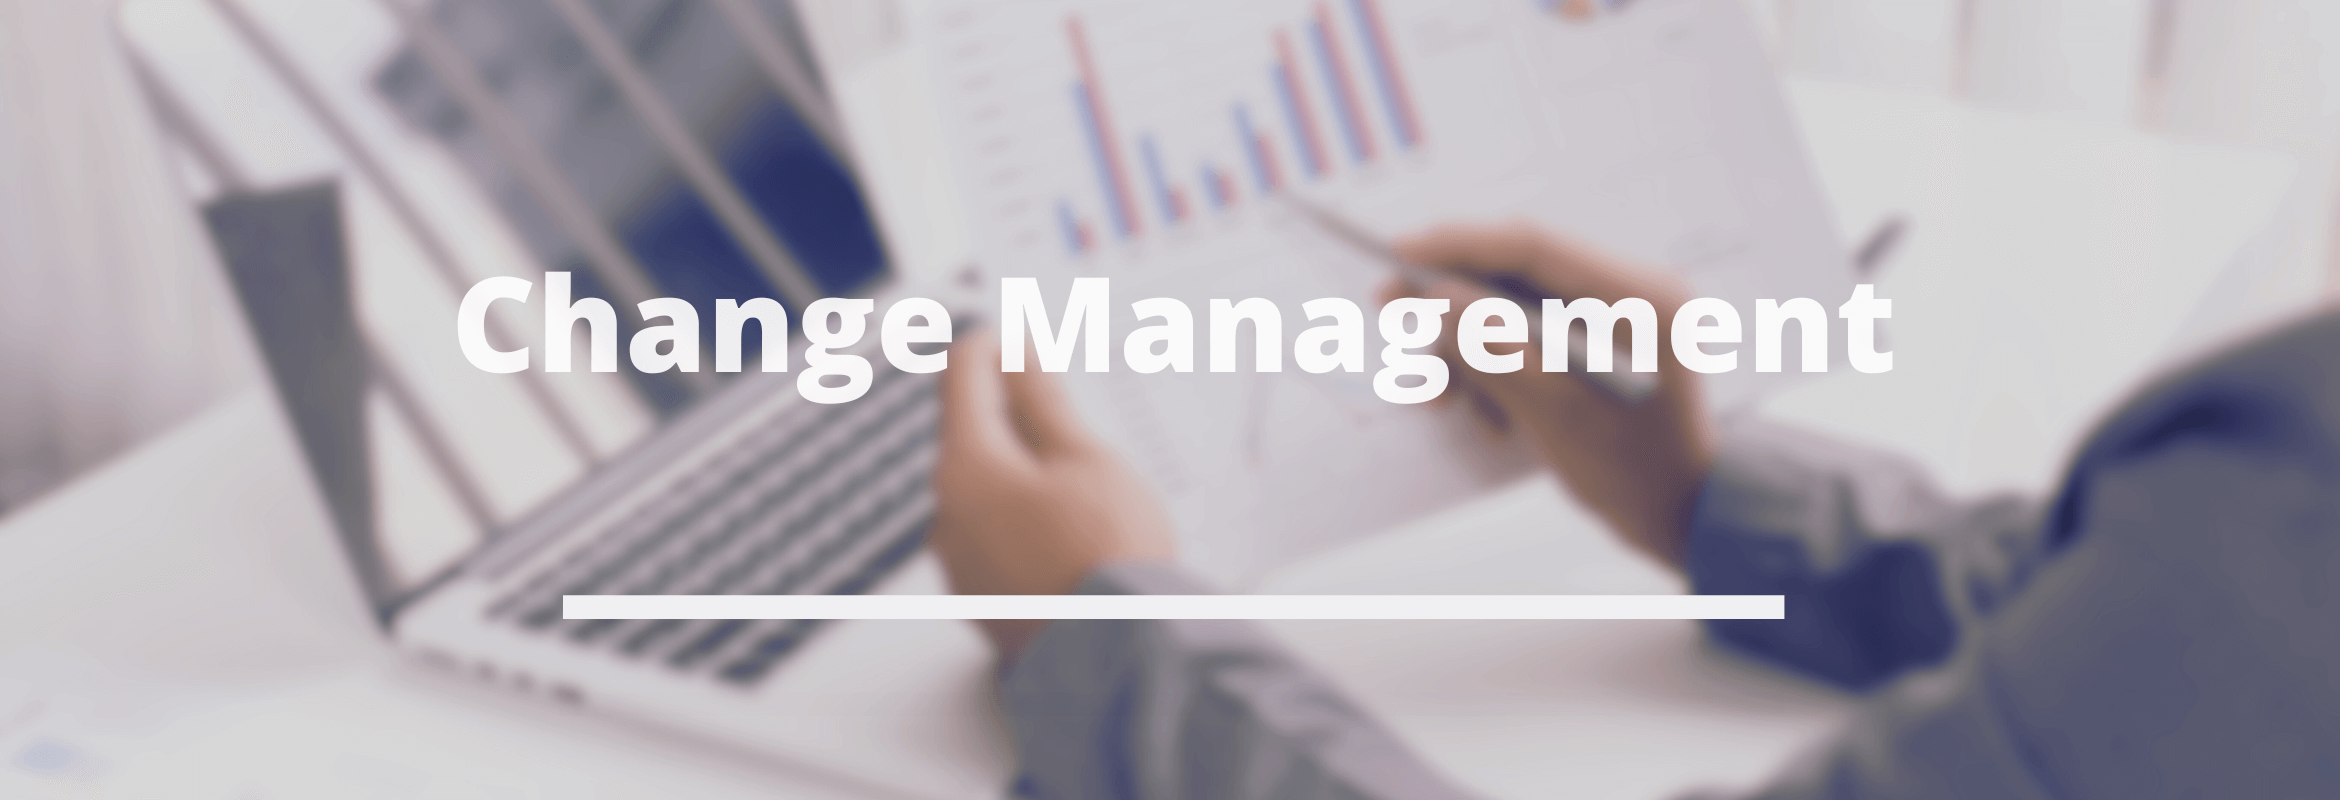 Image of Change Management